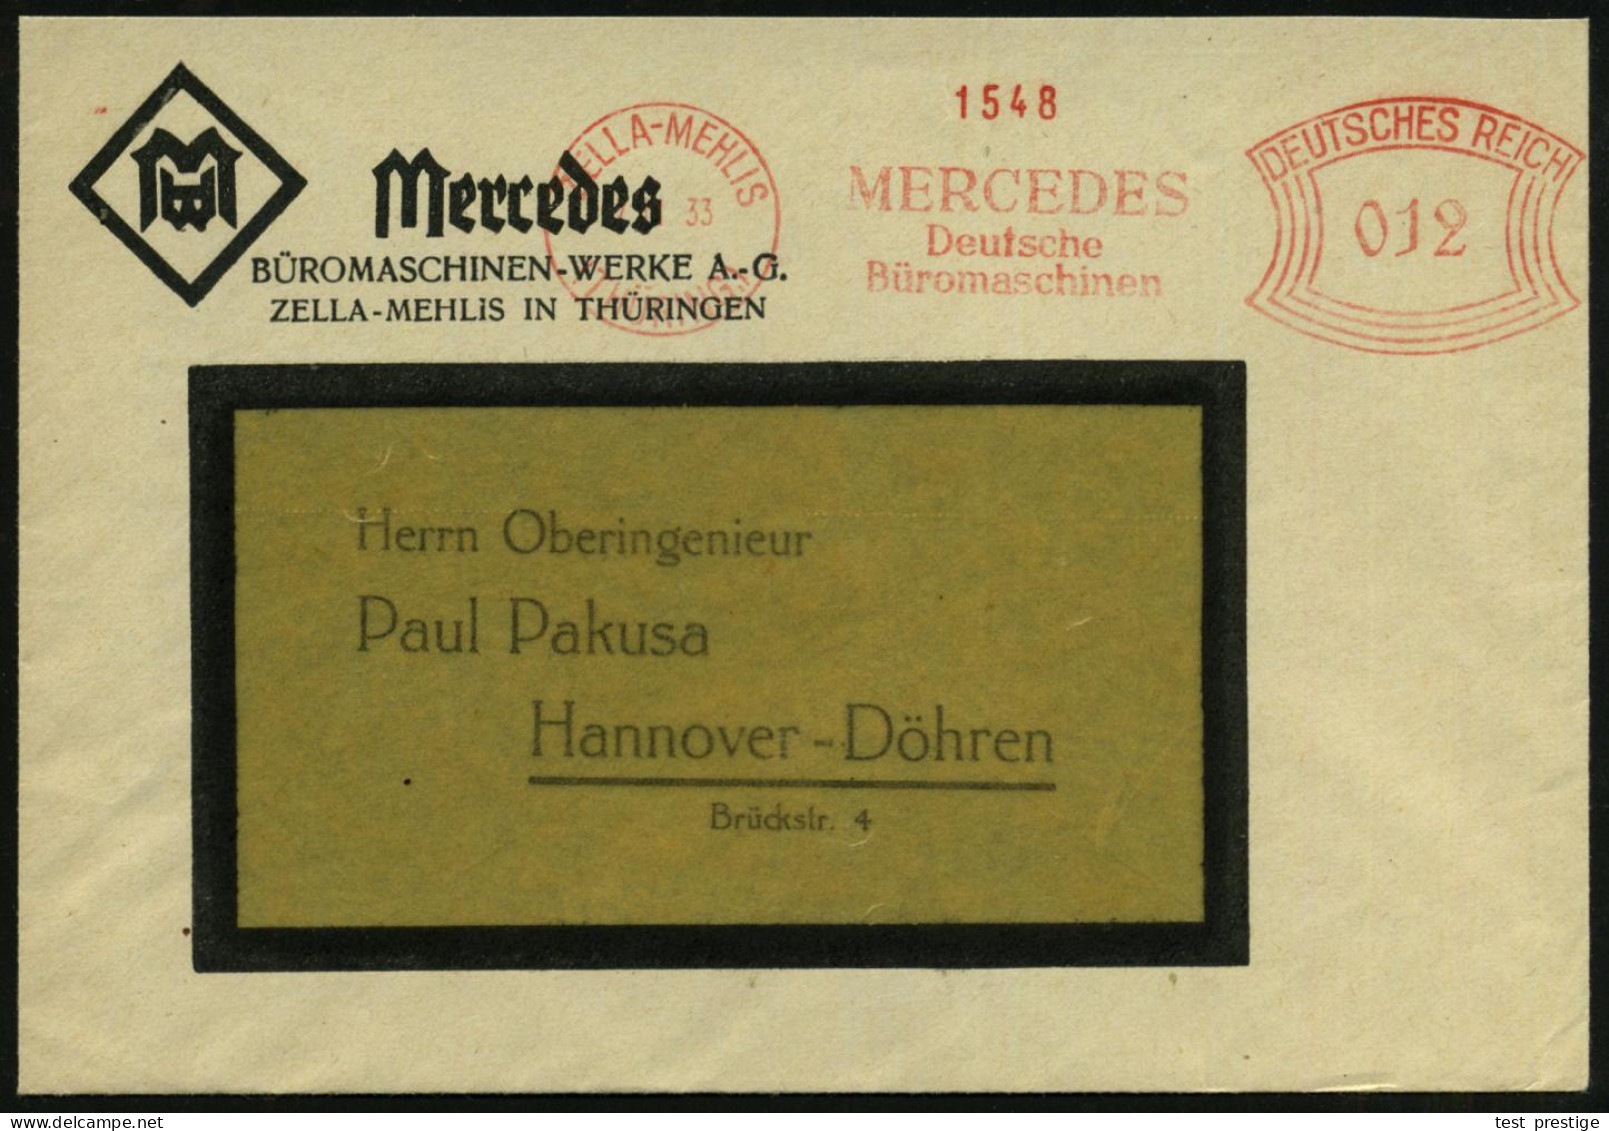 ZELLA-MEHLIS/ (THÜRING:)/ MERCEDES/ Deutsche/ Büromaschinen 1933 (2.11.) AFS  Francotyp Auf Firmen-Bf.: Mercedes BÜROMAS - Computers